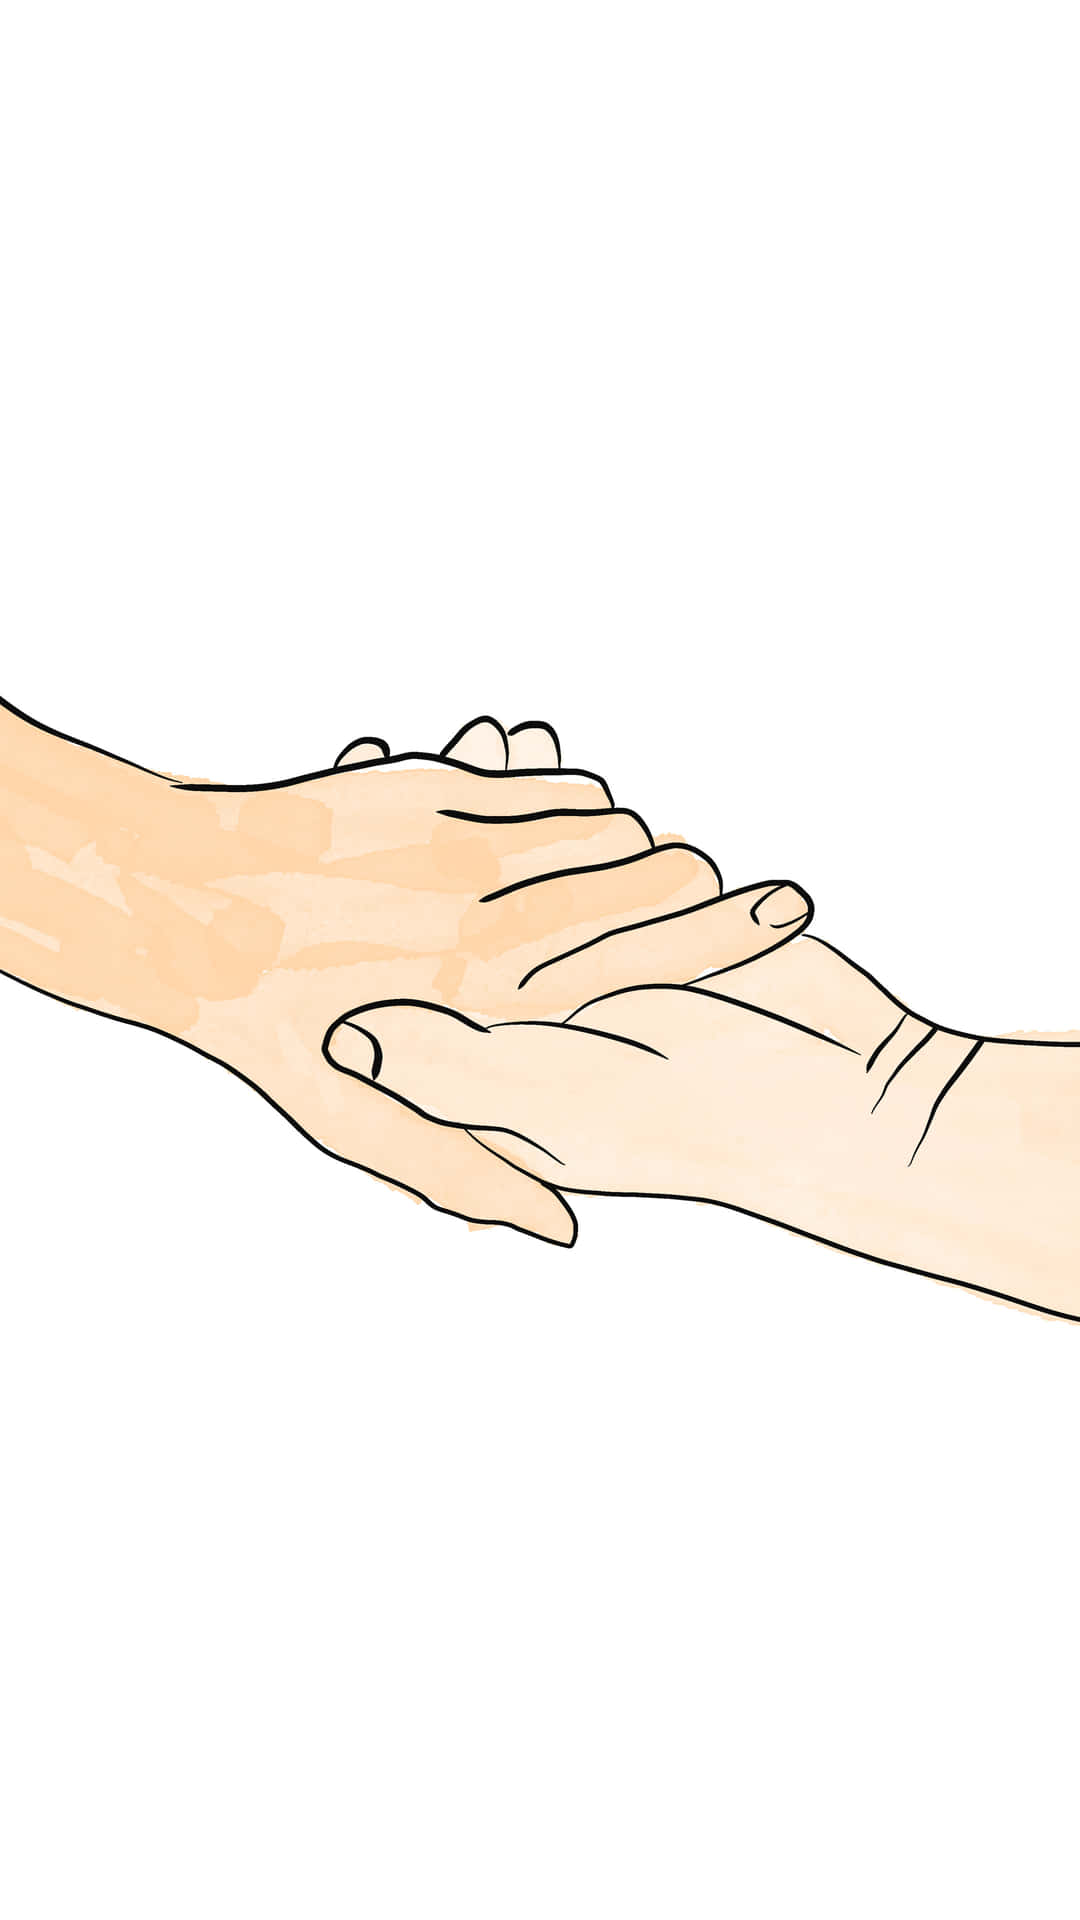 Handshake Drawing